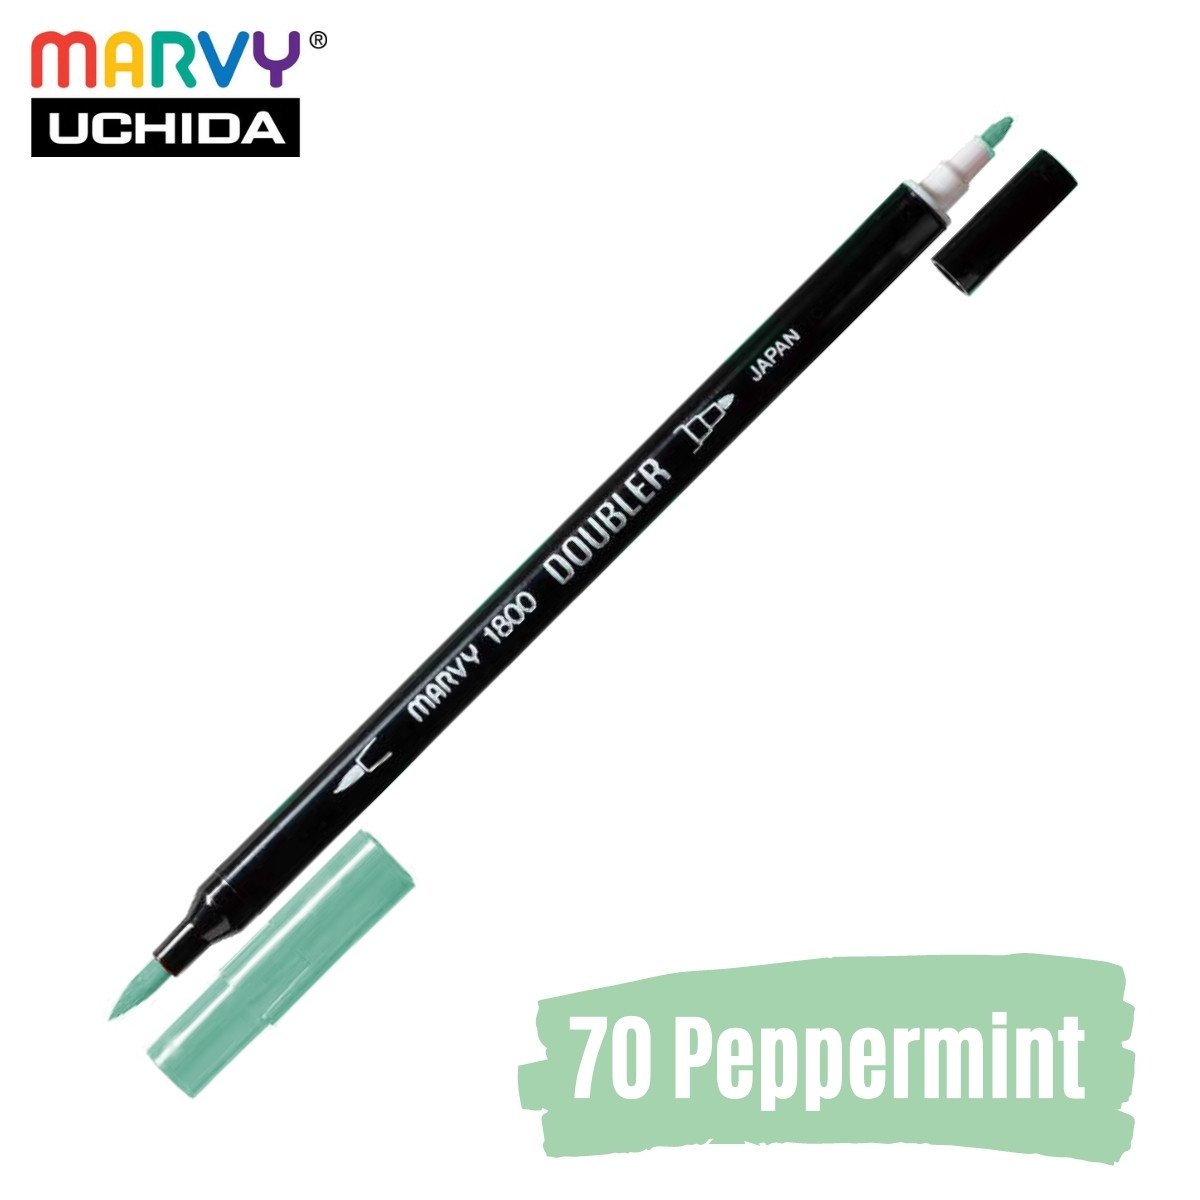 Marvy Artist Brush Pen 1800 Çift Taraflı Firça Uçlu Kalem 70 Peppermint